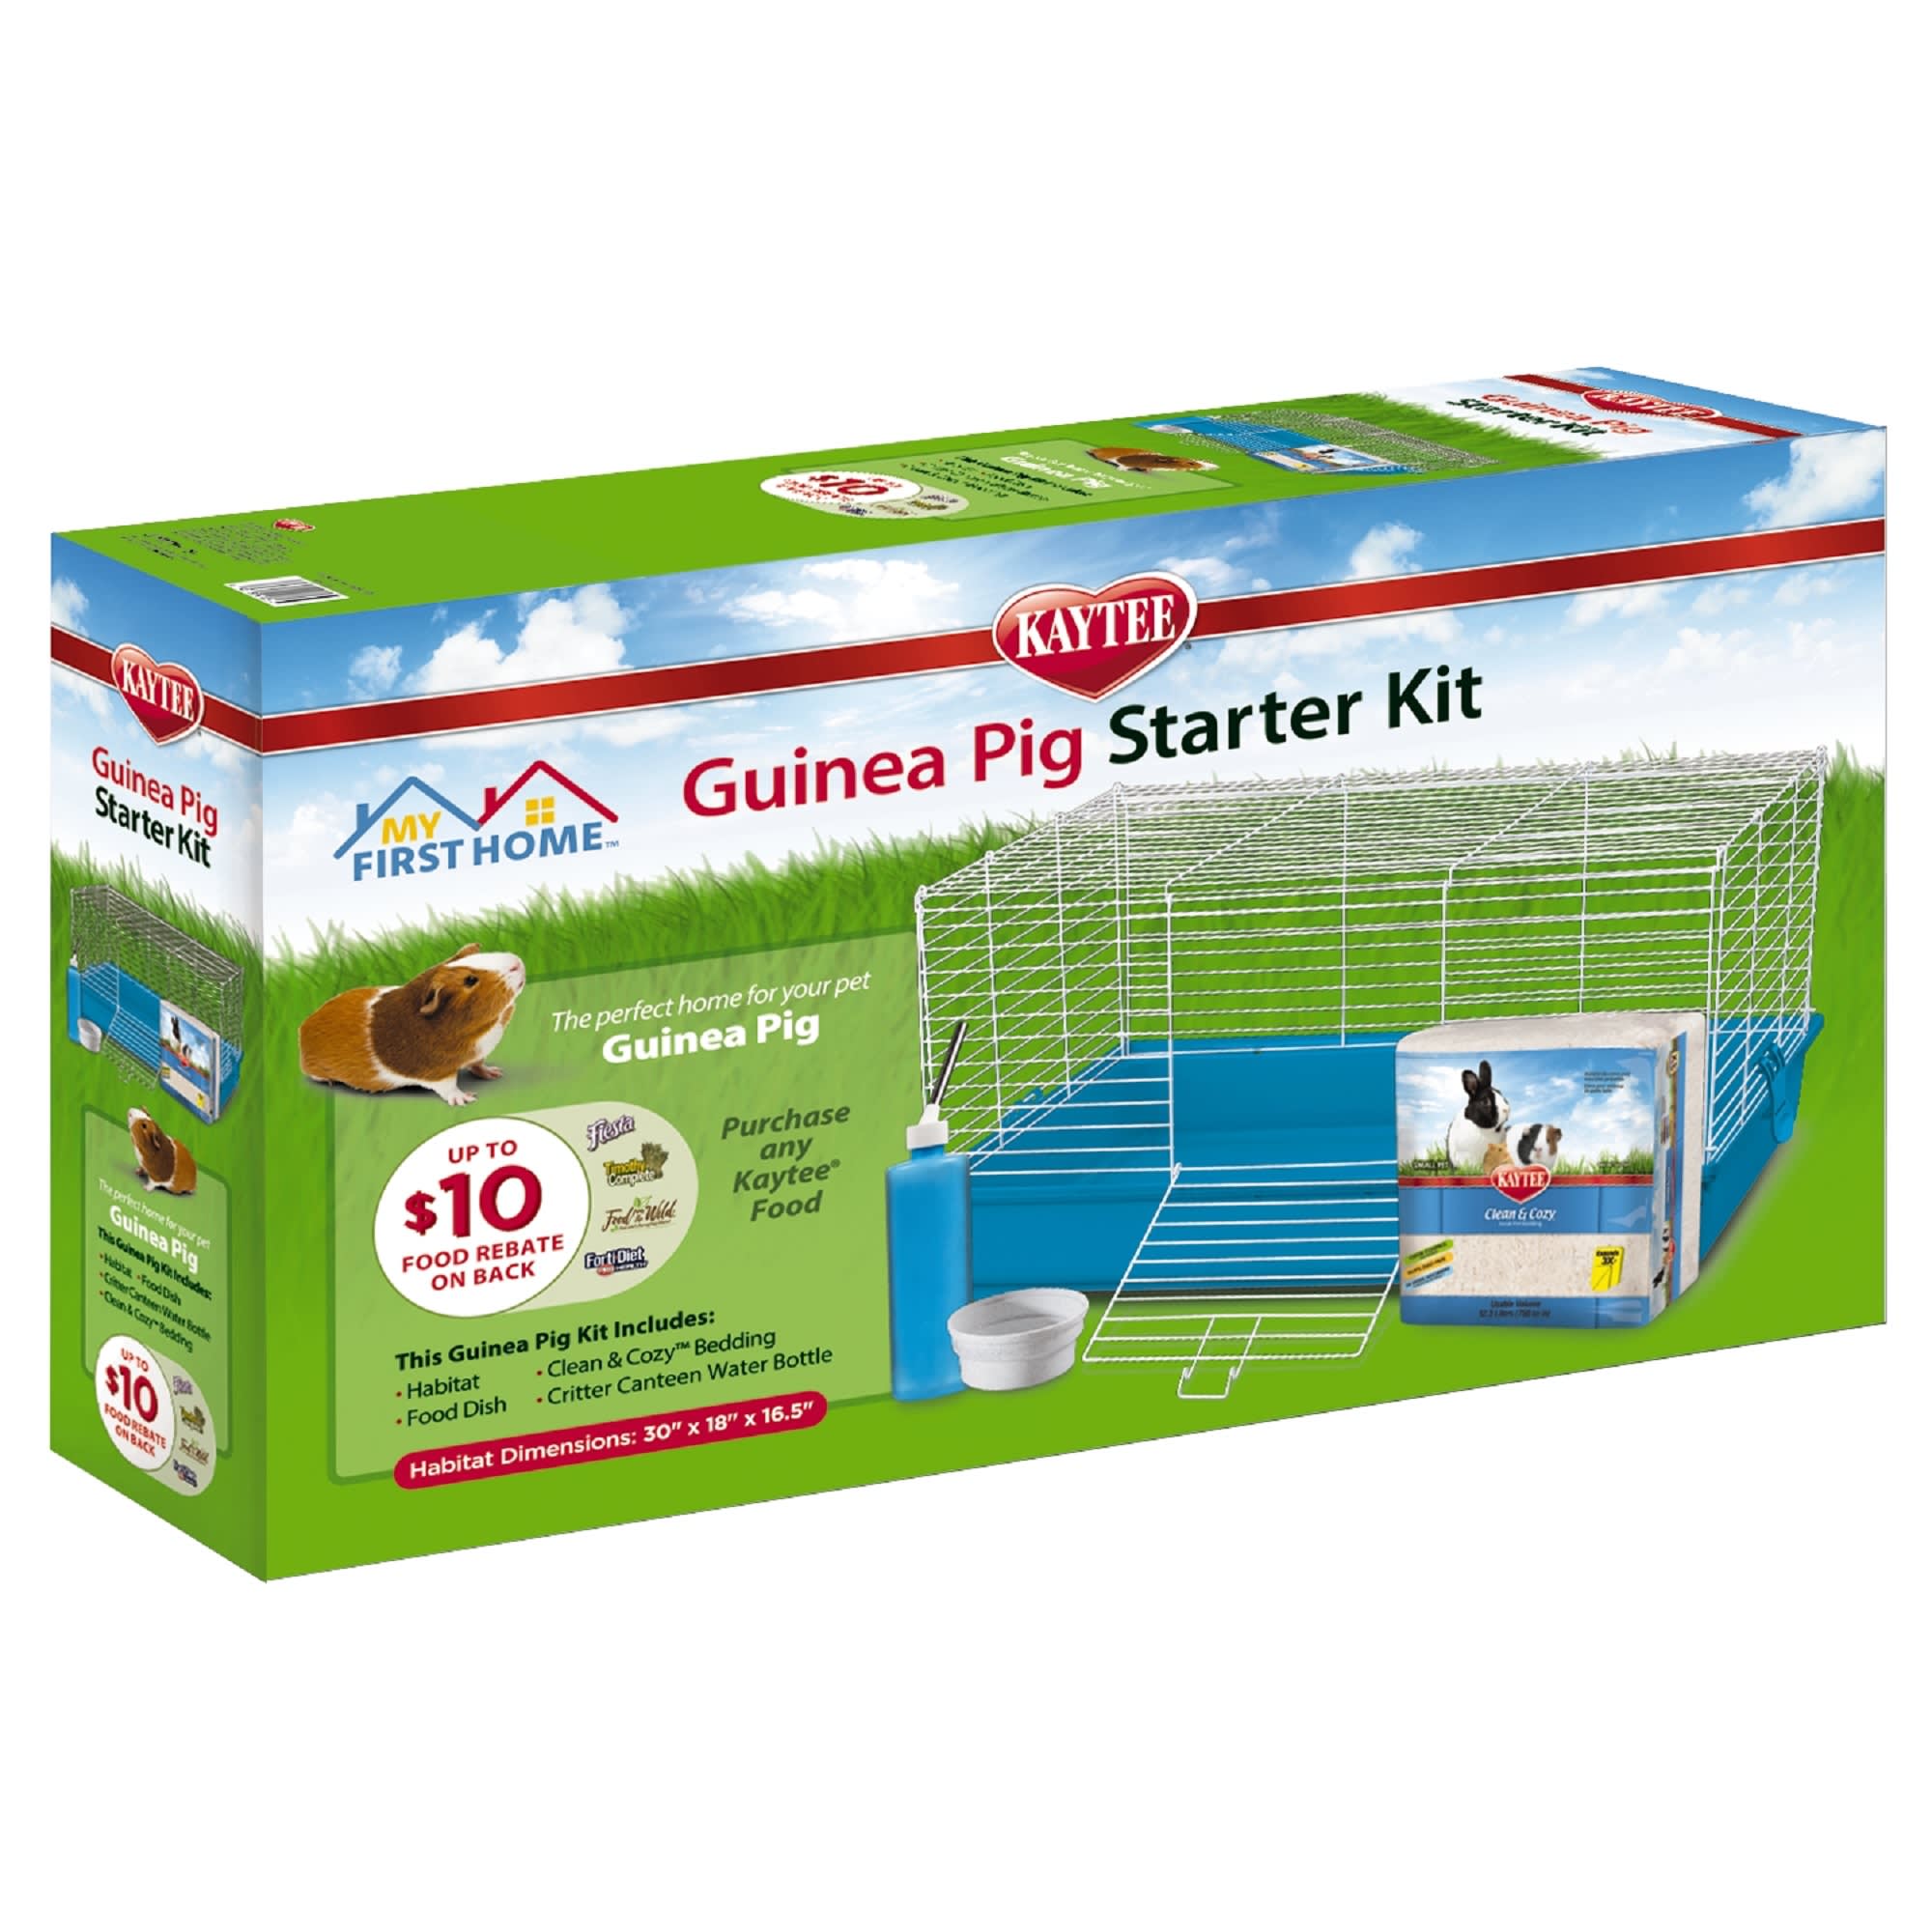 Kaytee My First Home Guinea Pig Starter